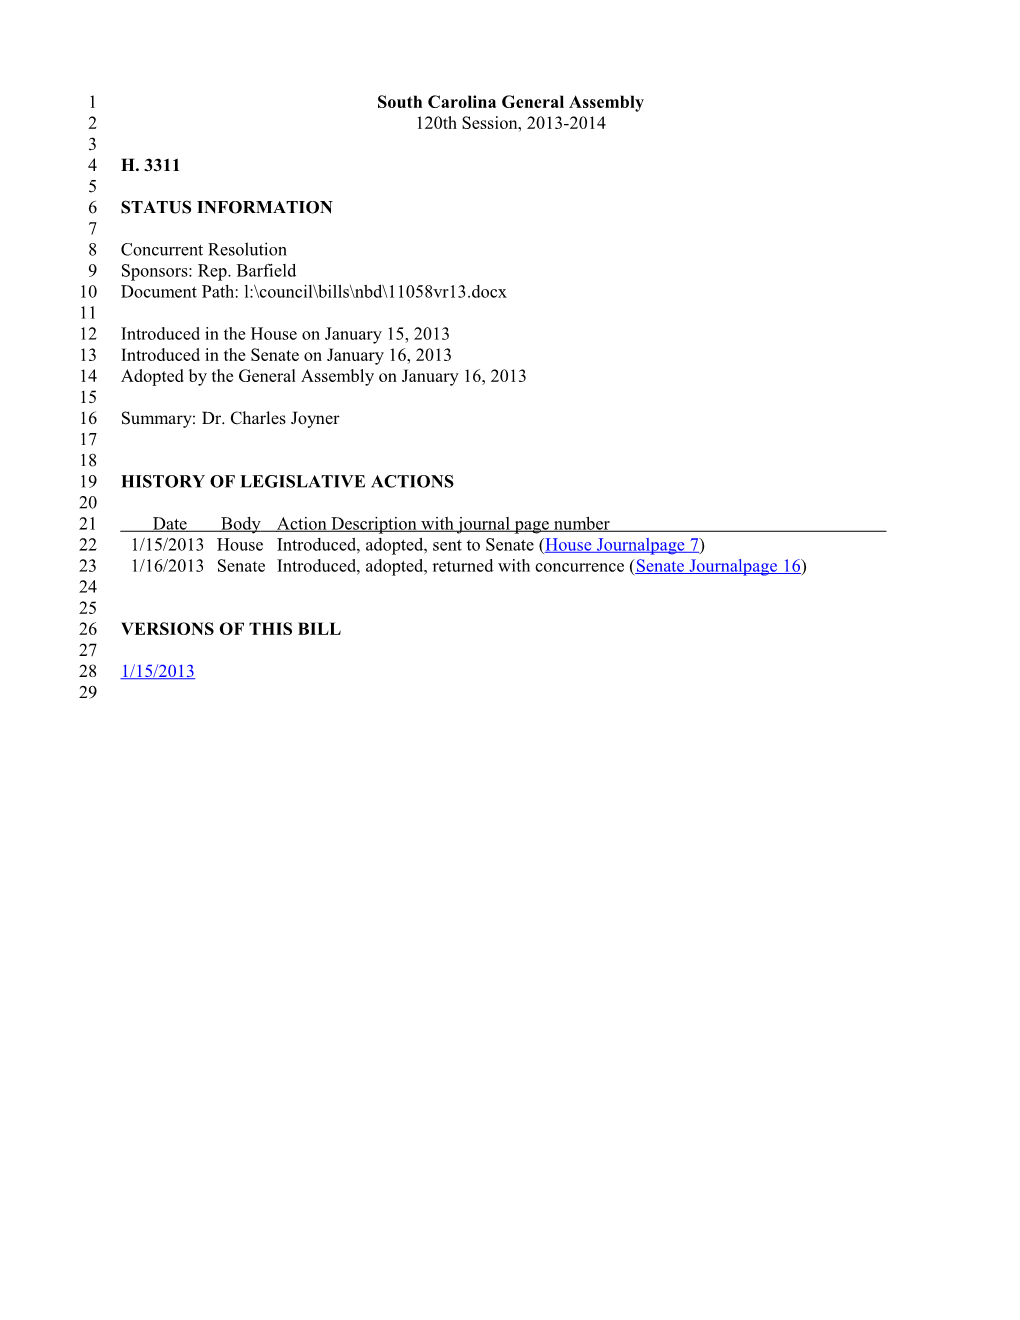 2013-2014 Bill 3311: Dr. Charles Joyner - South Carolina Legislature Online